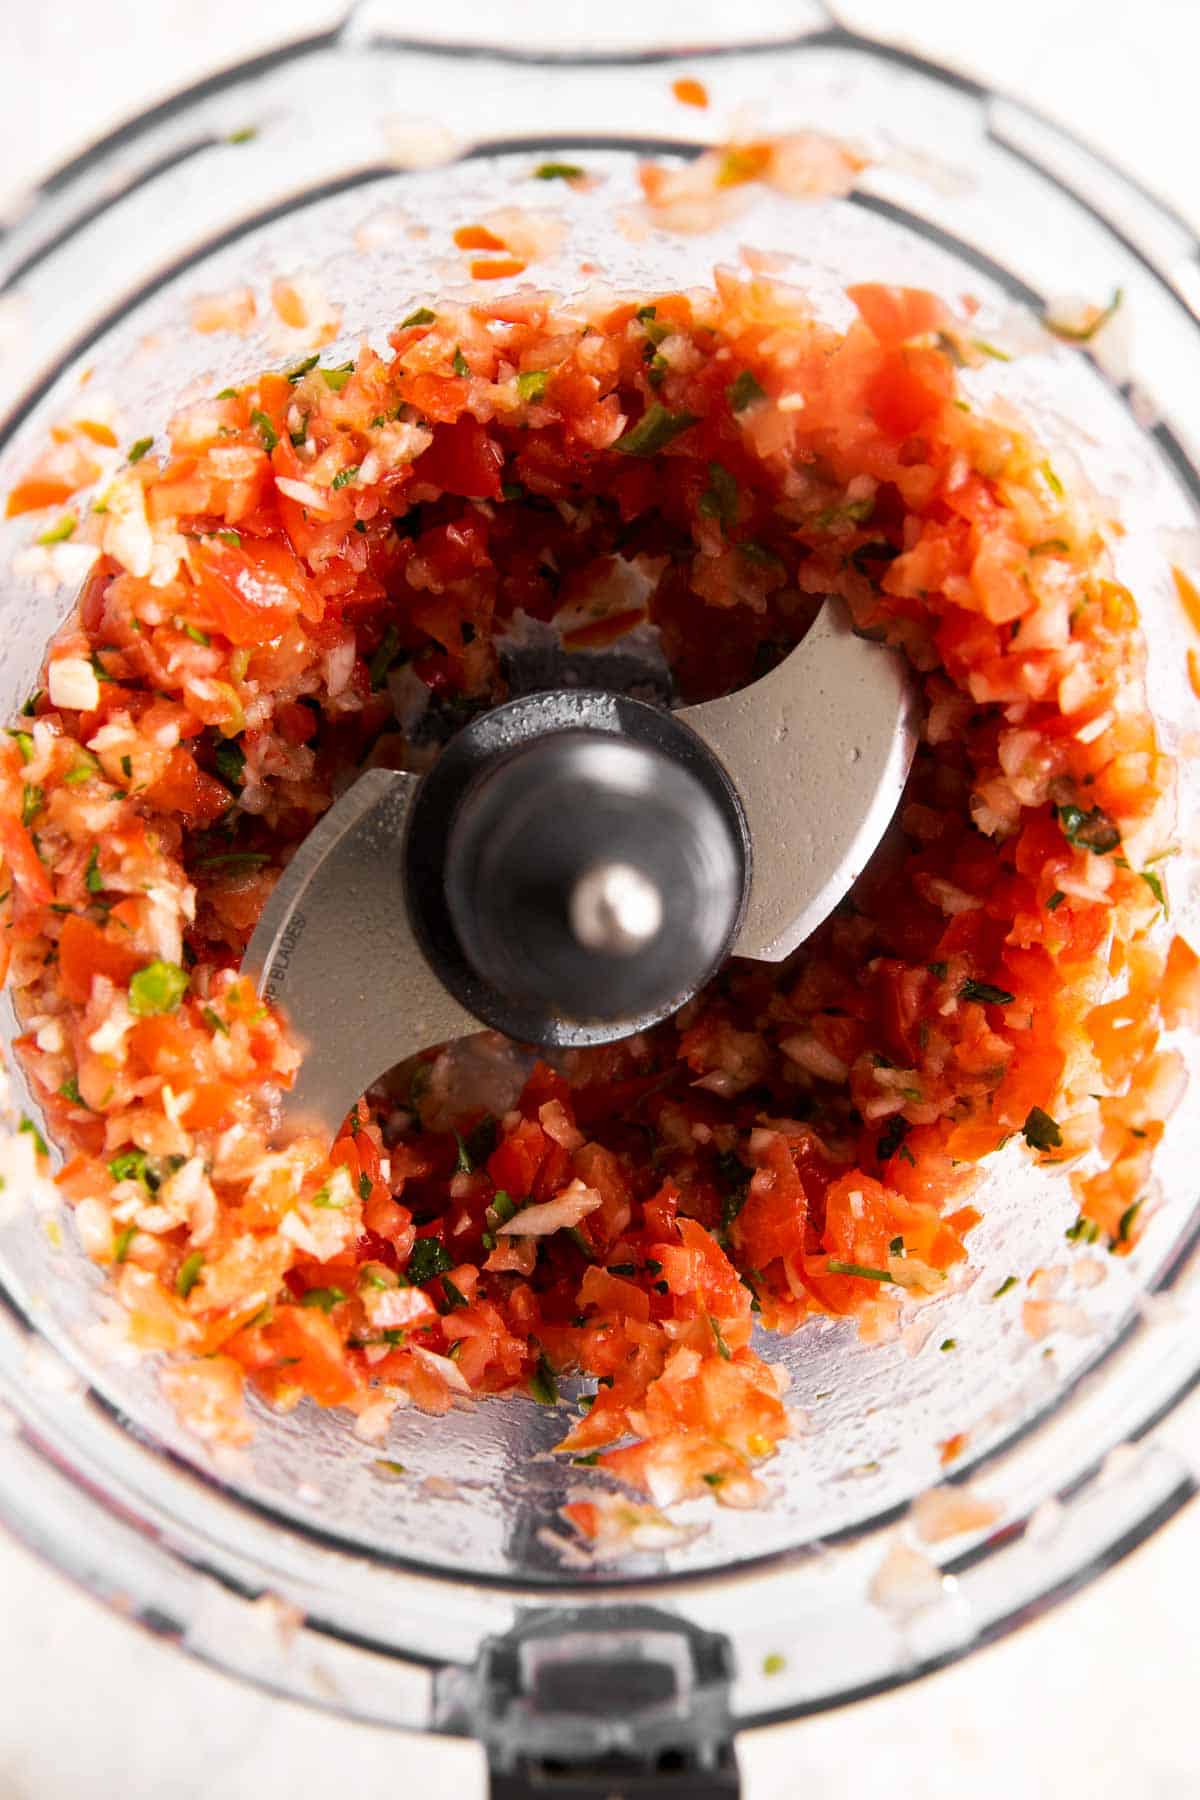 How to Make Food Processor Salsa